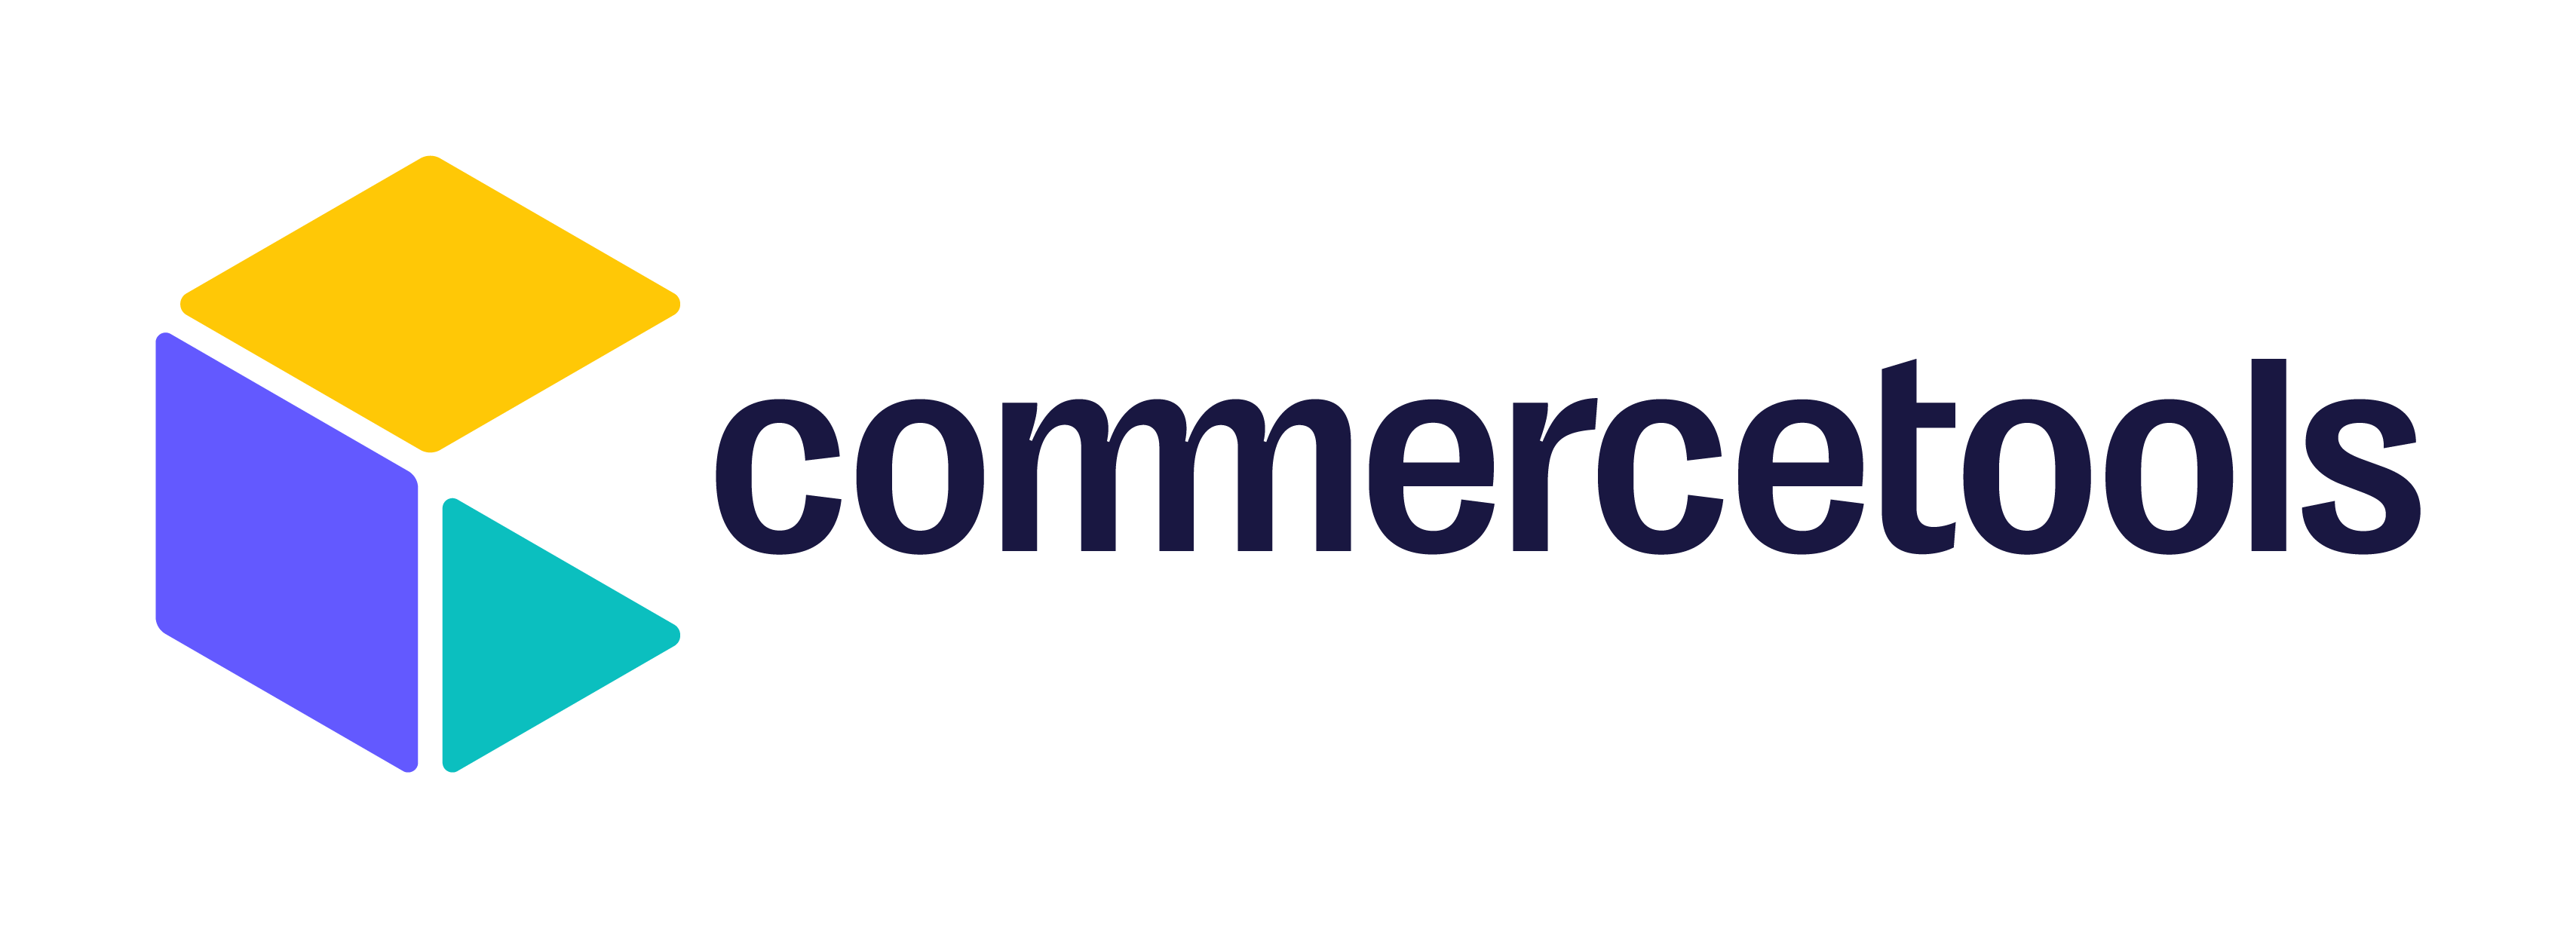 commercetools-logo.png